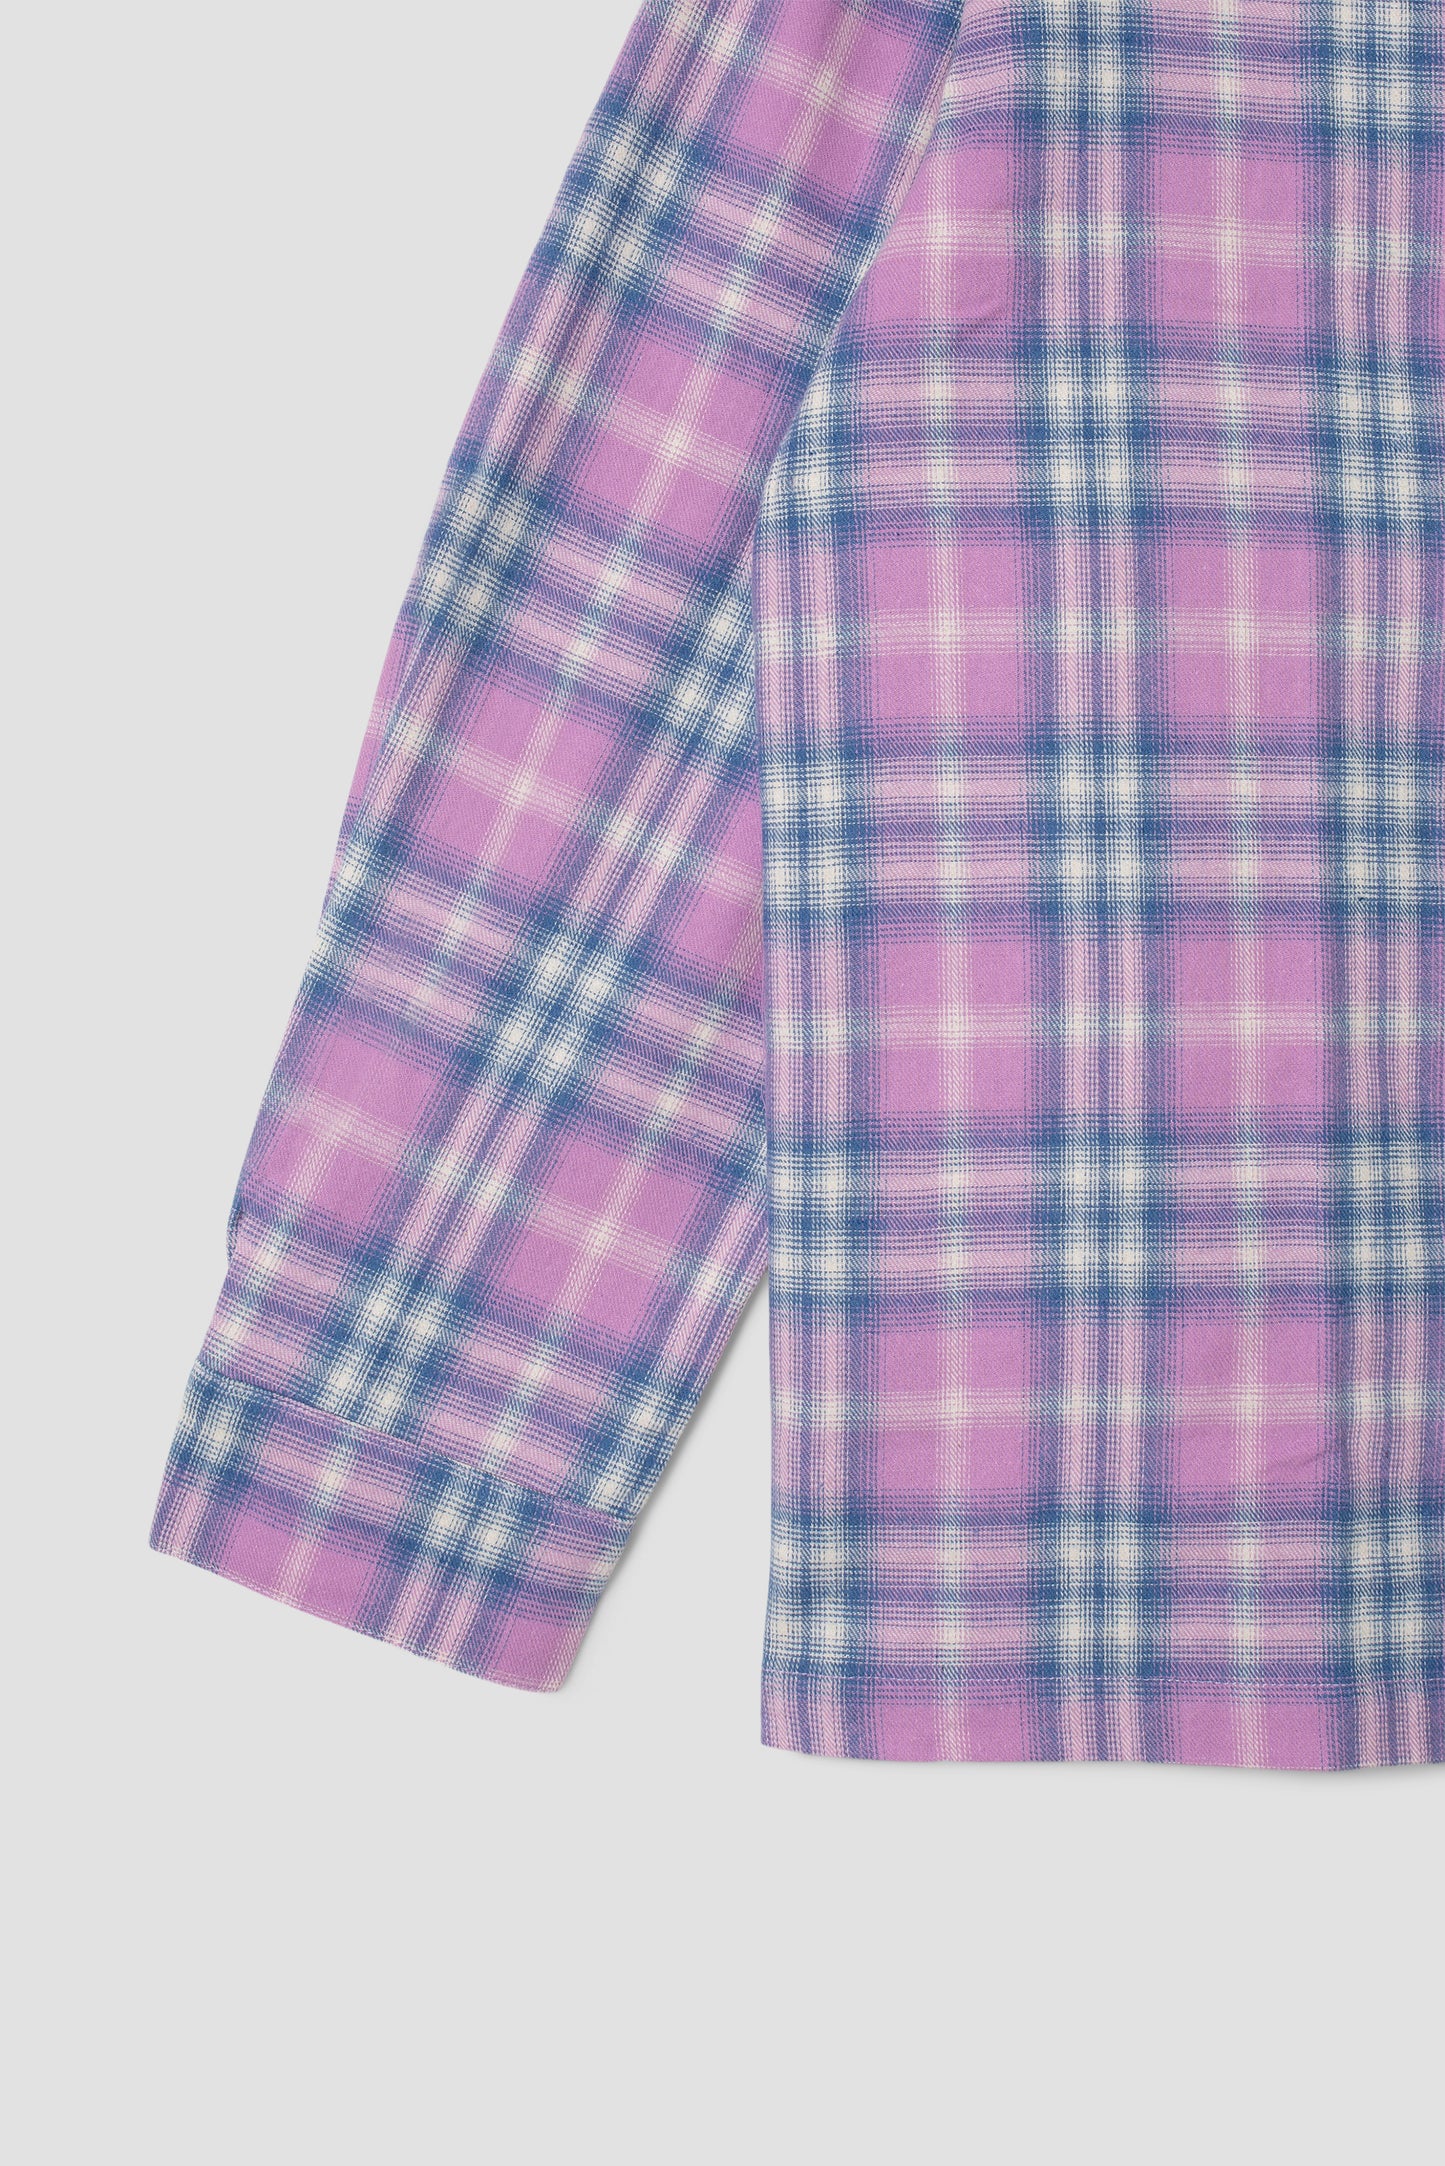 Flannel Shirt (Pink) Plaid